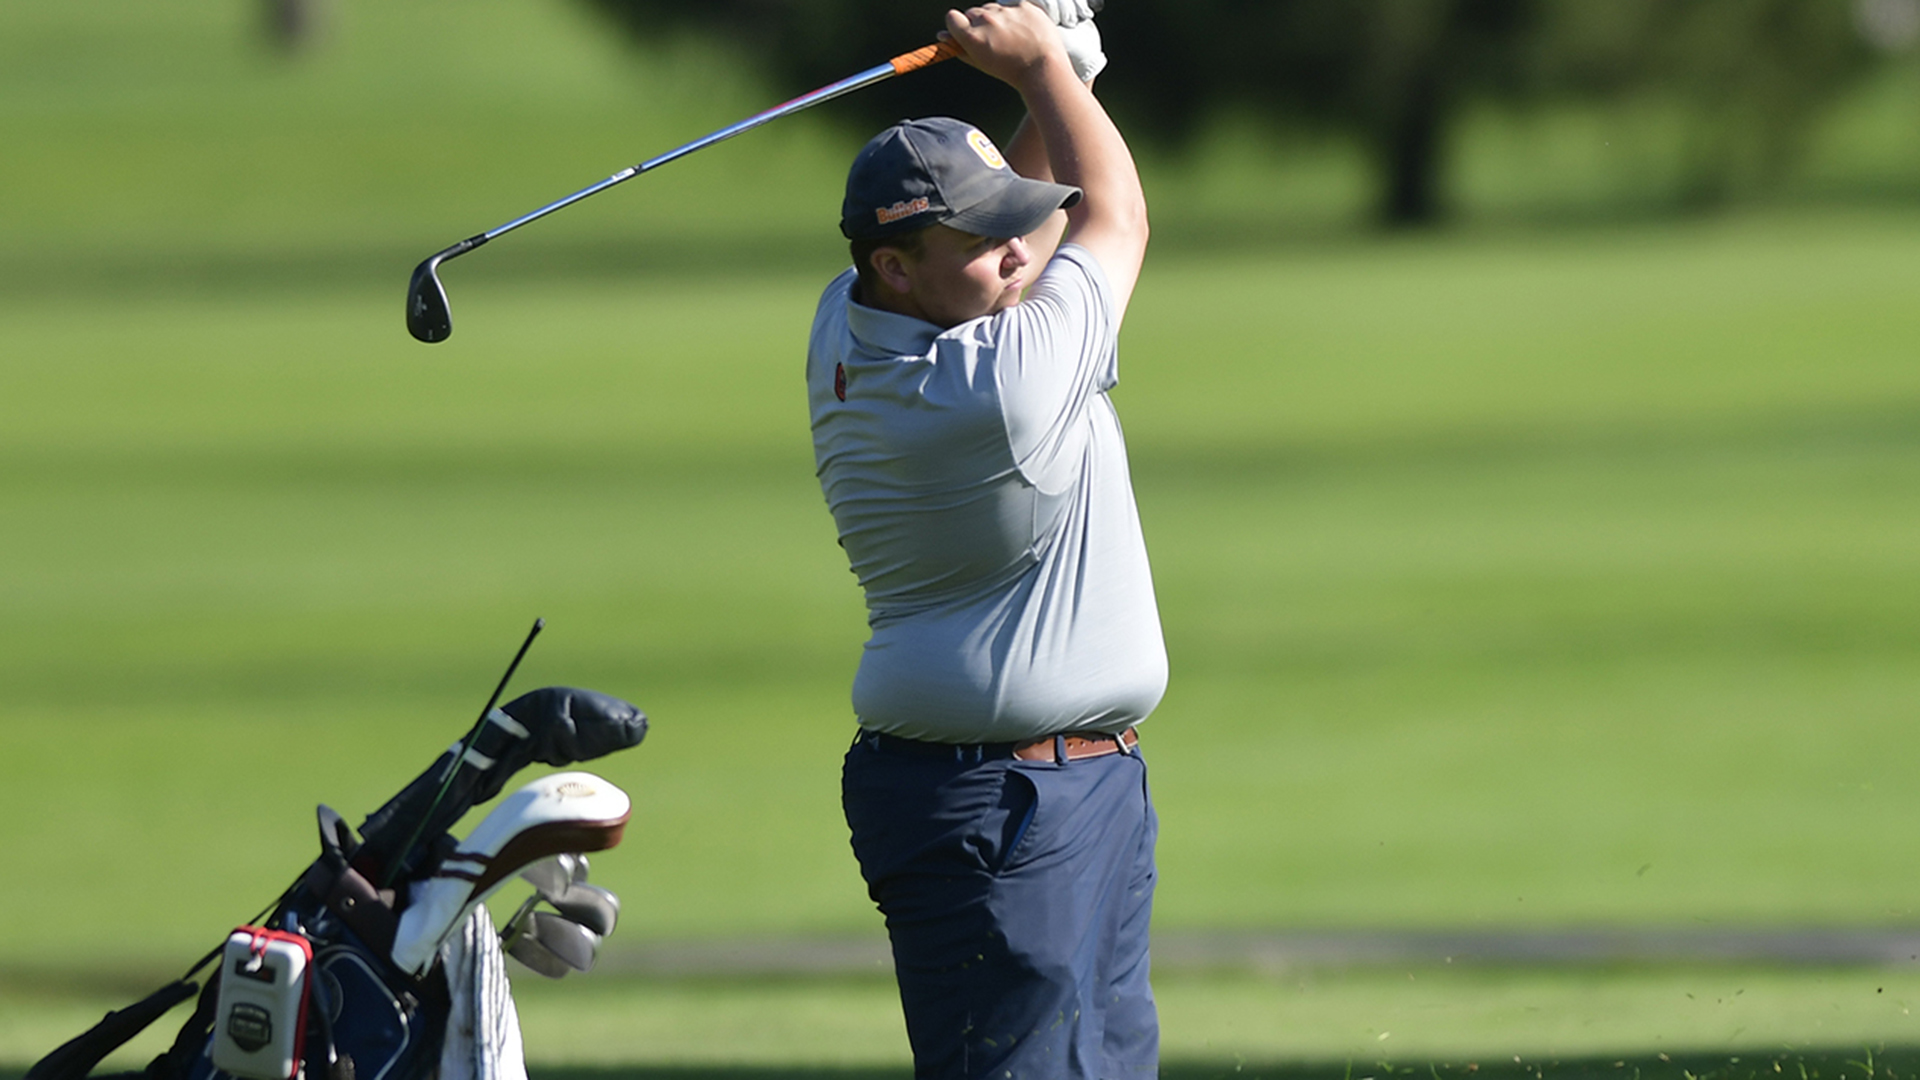 Greene, Gettysbug Grab Lead at CC Men's Golf Championship